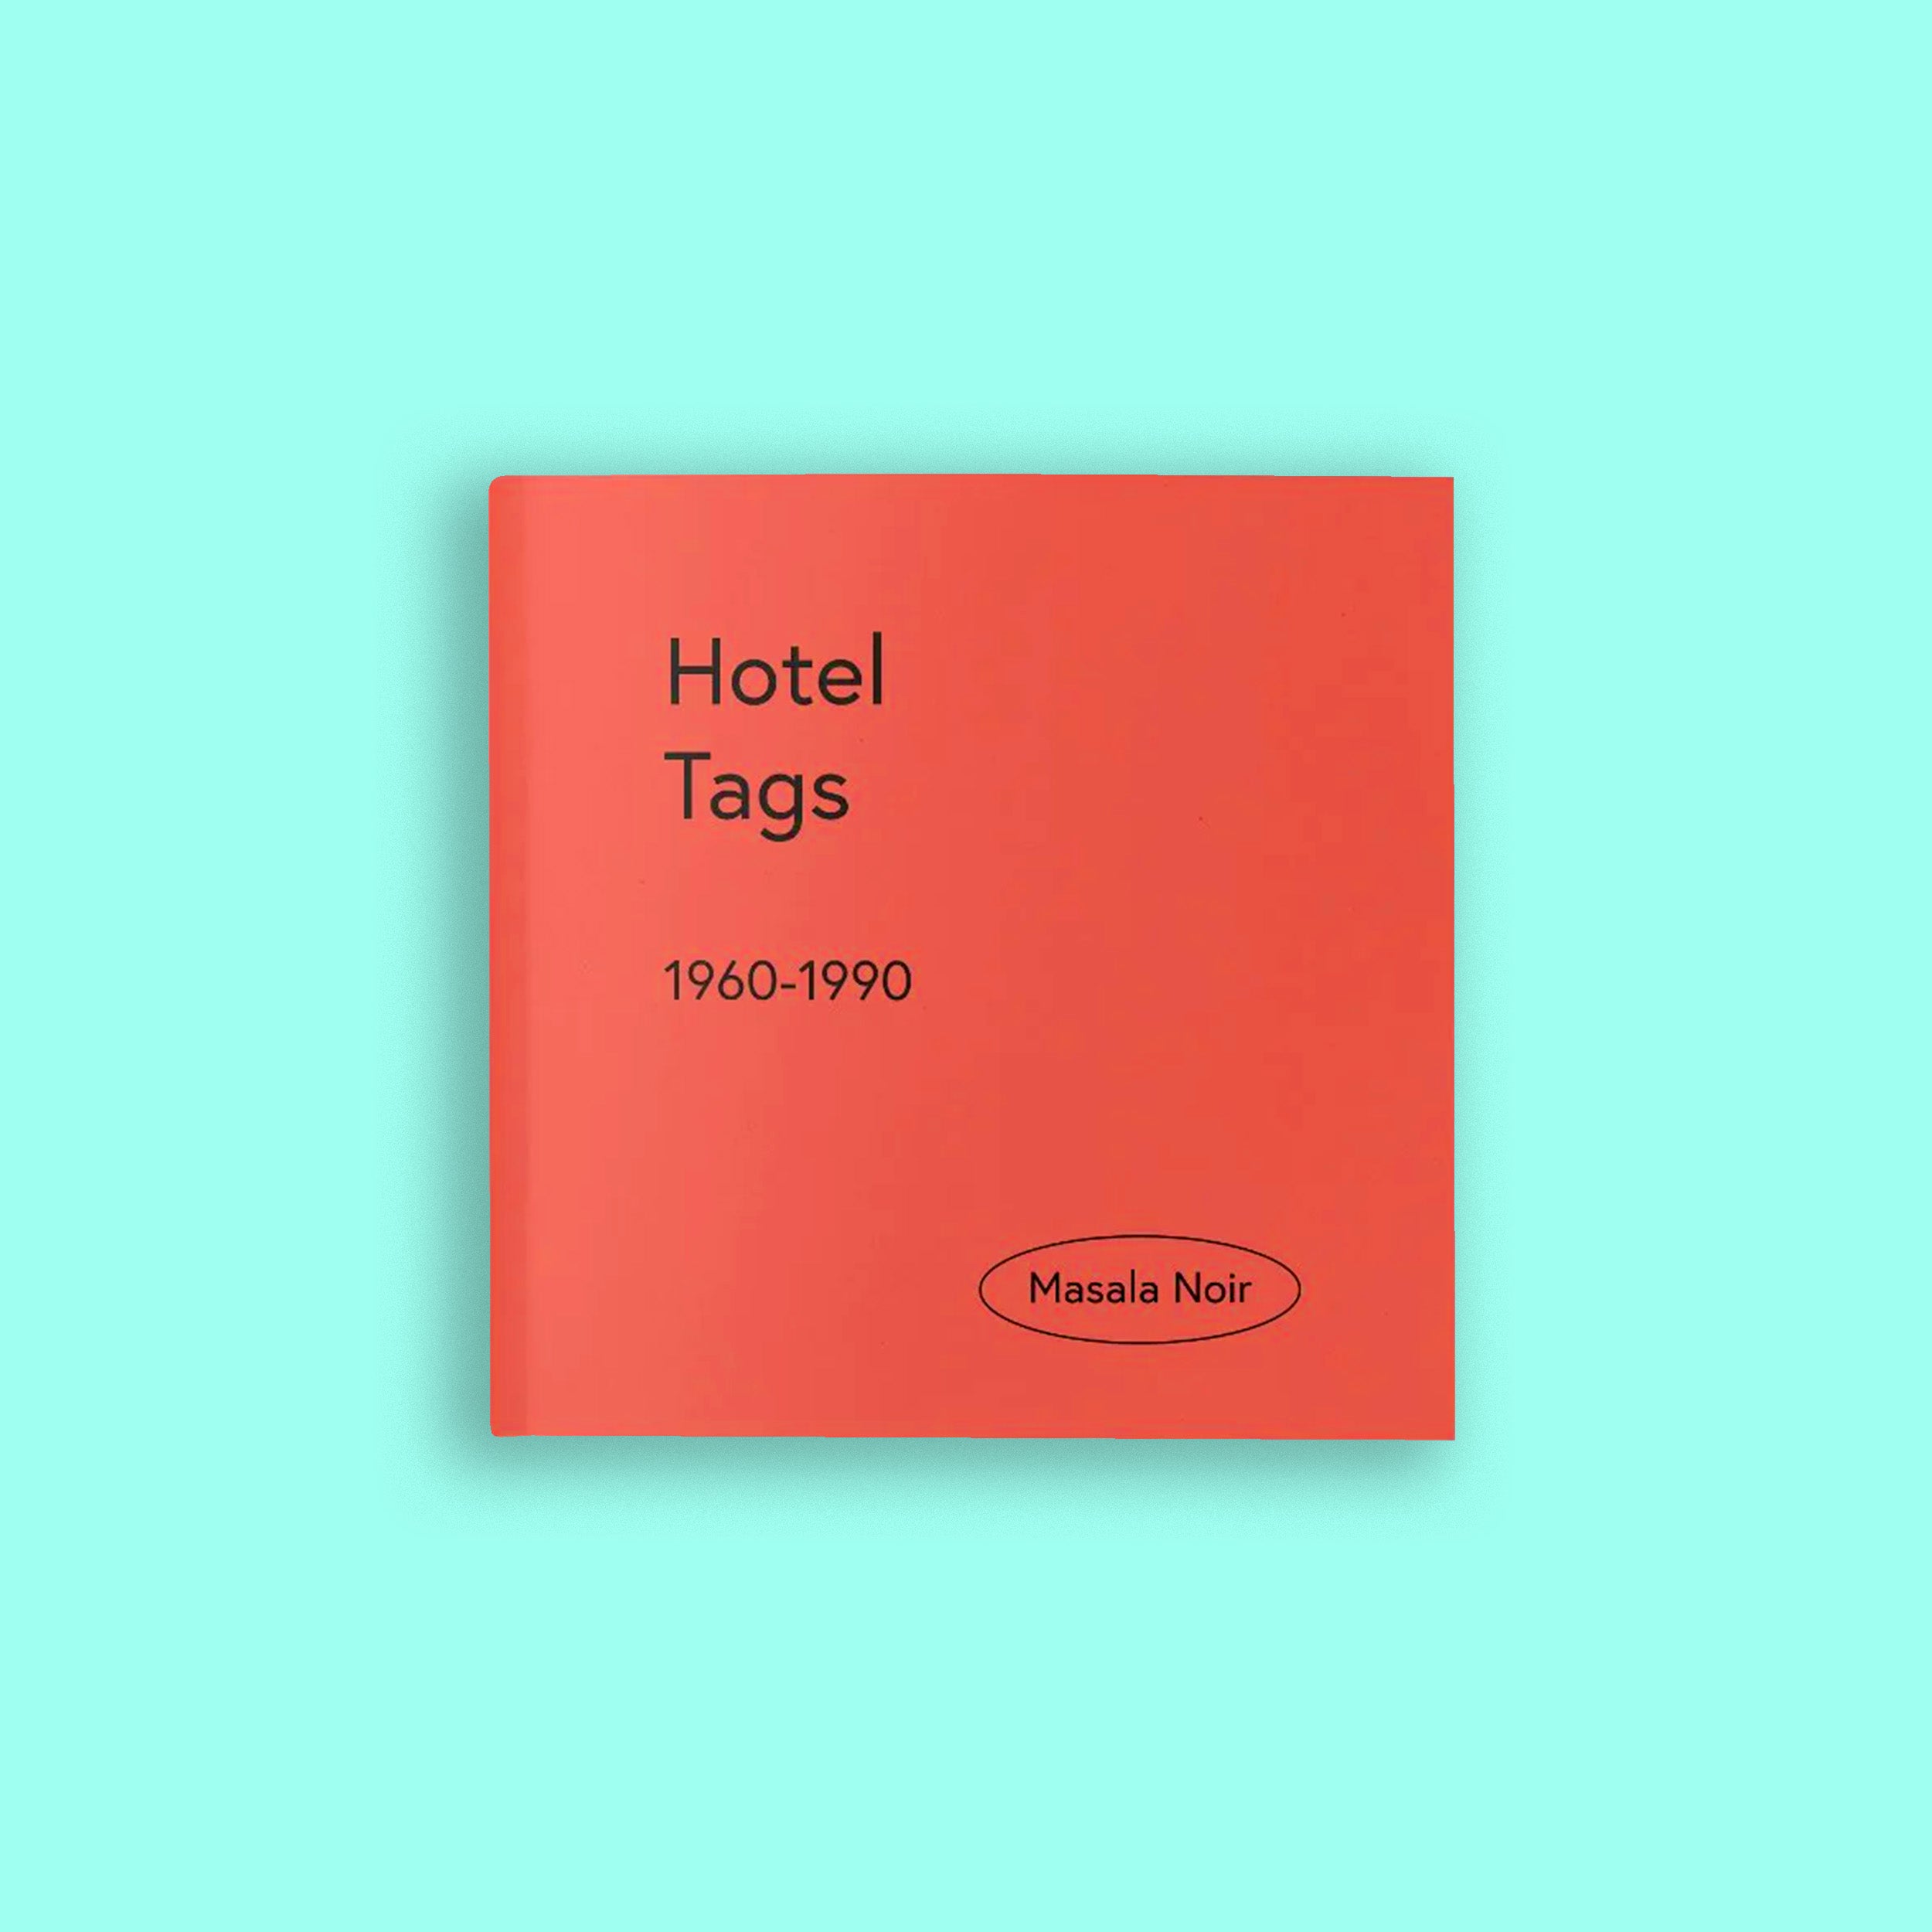 HOTEL TAGS (1960 - 1990) BY MASALA NOIR